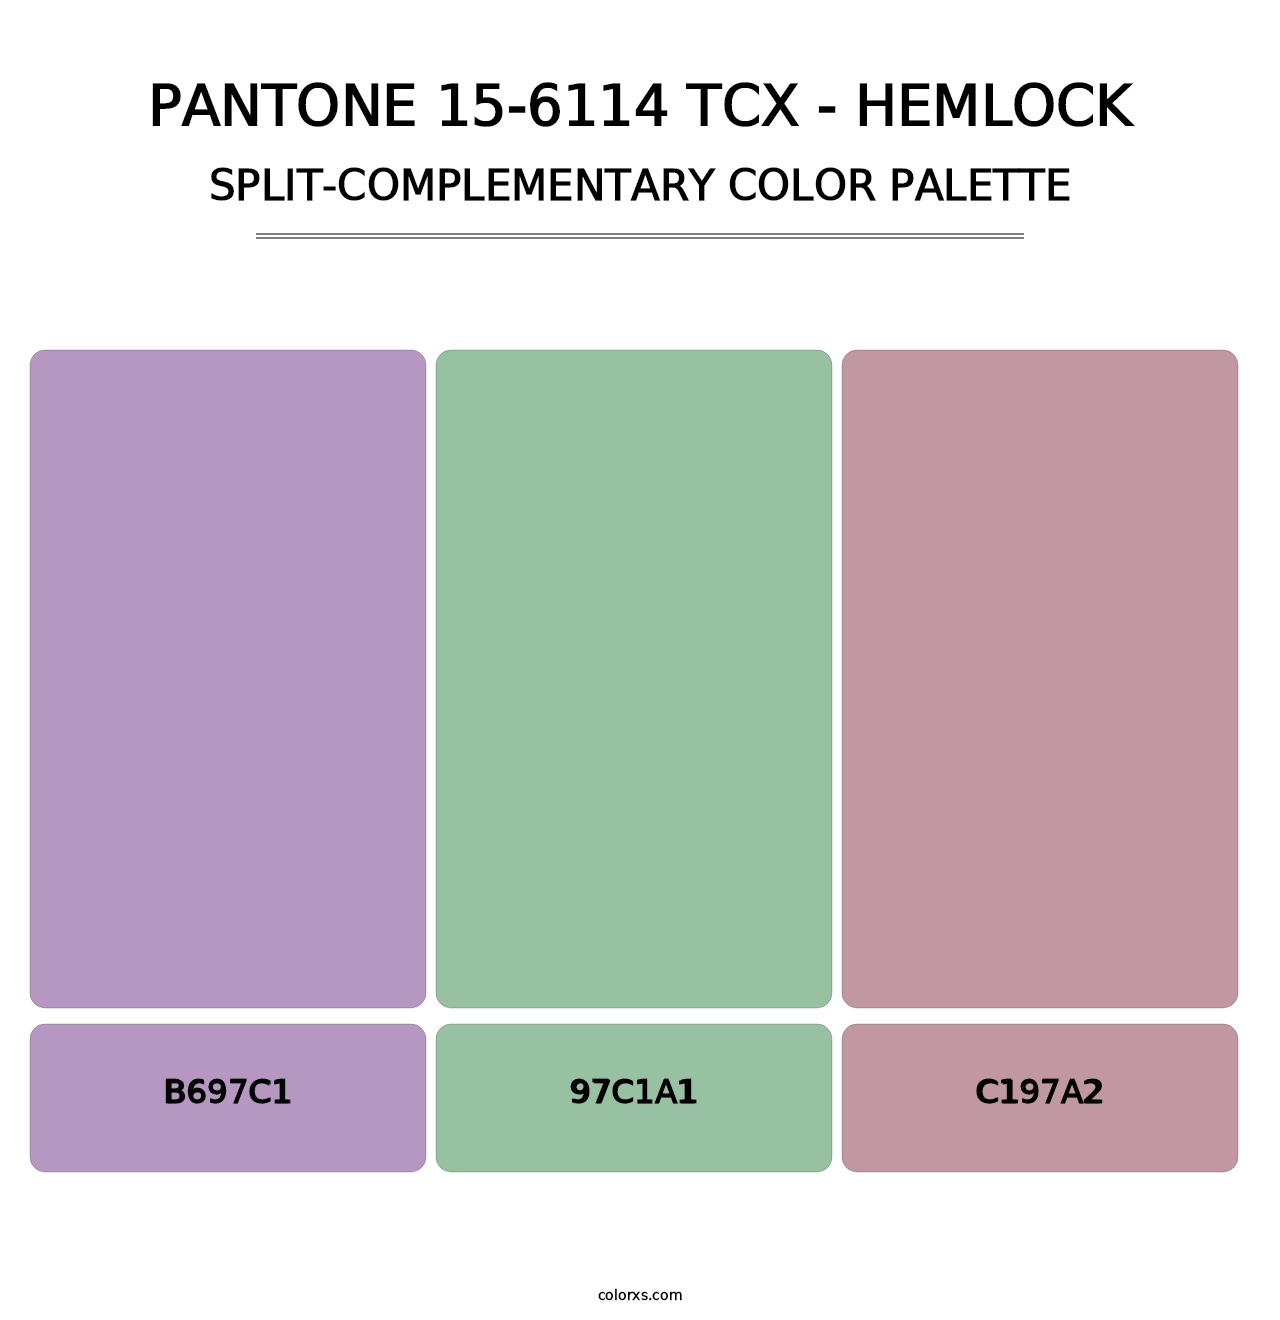 PANTONE 15-6114 TCX - Hemlock - Split-Complementary Color Palette